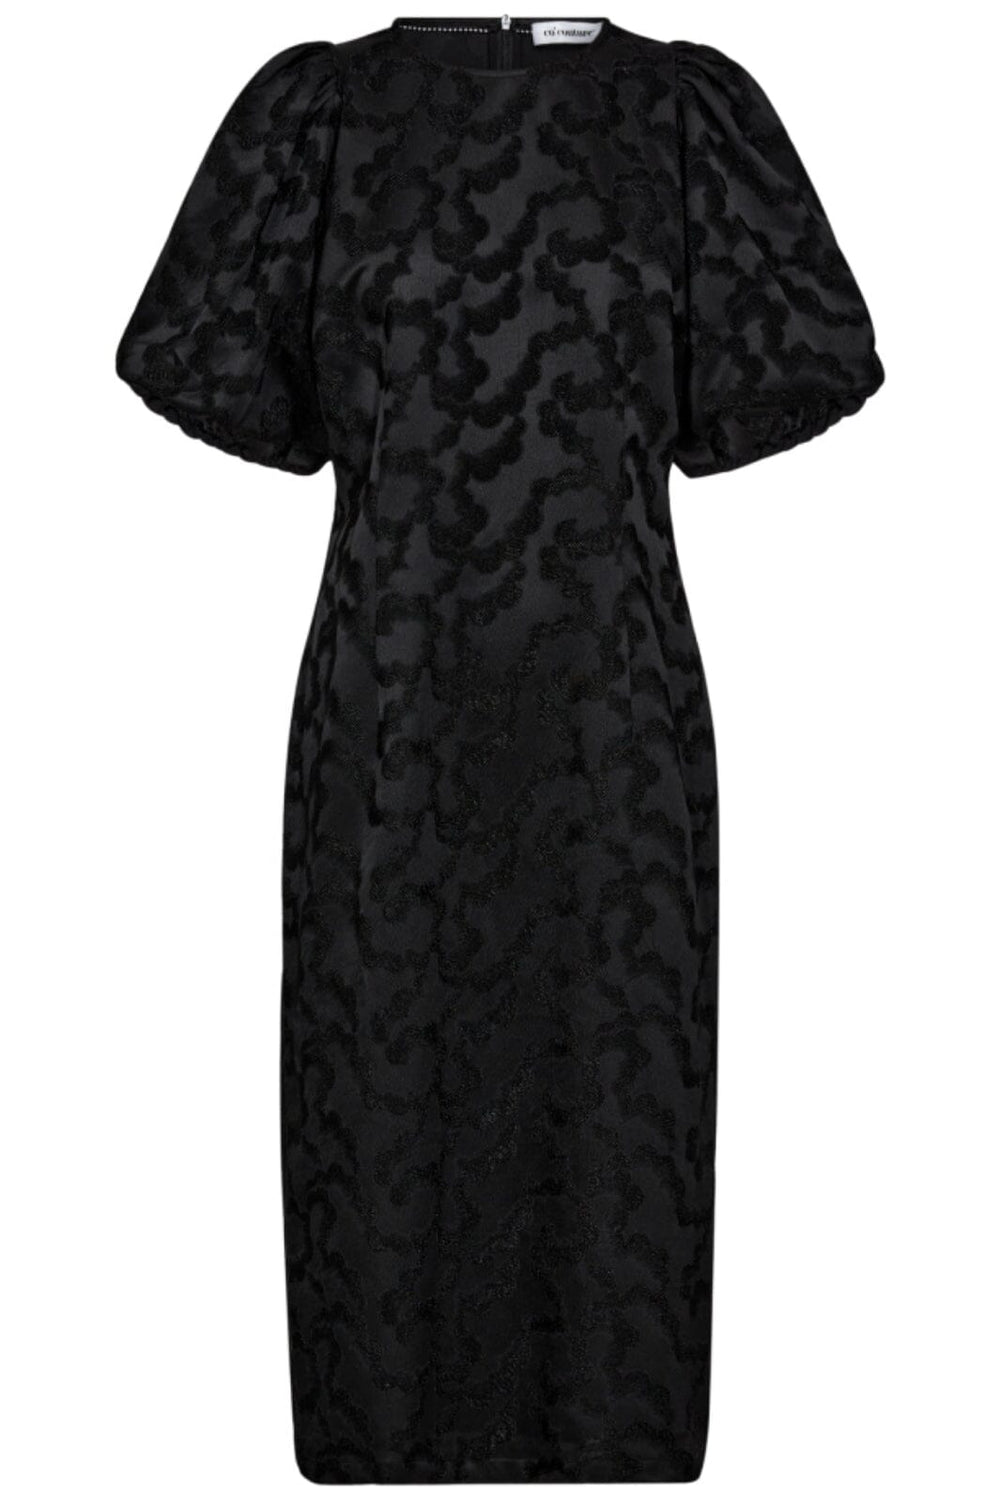 Co´couture - Blankacc Puff Dress 36074 - 96 Black Kjoler 